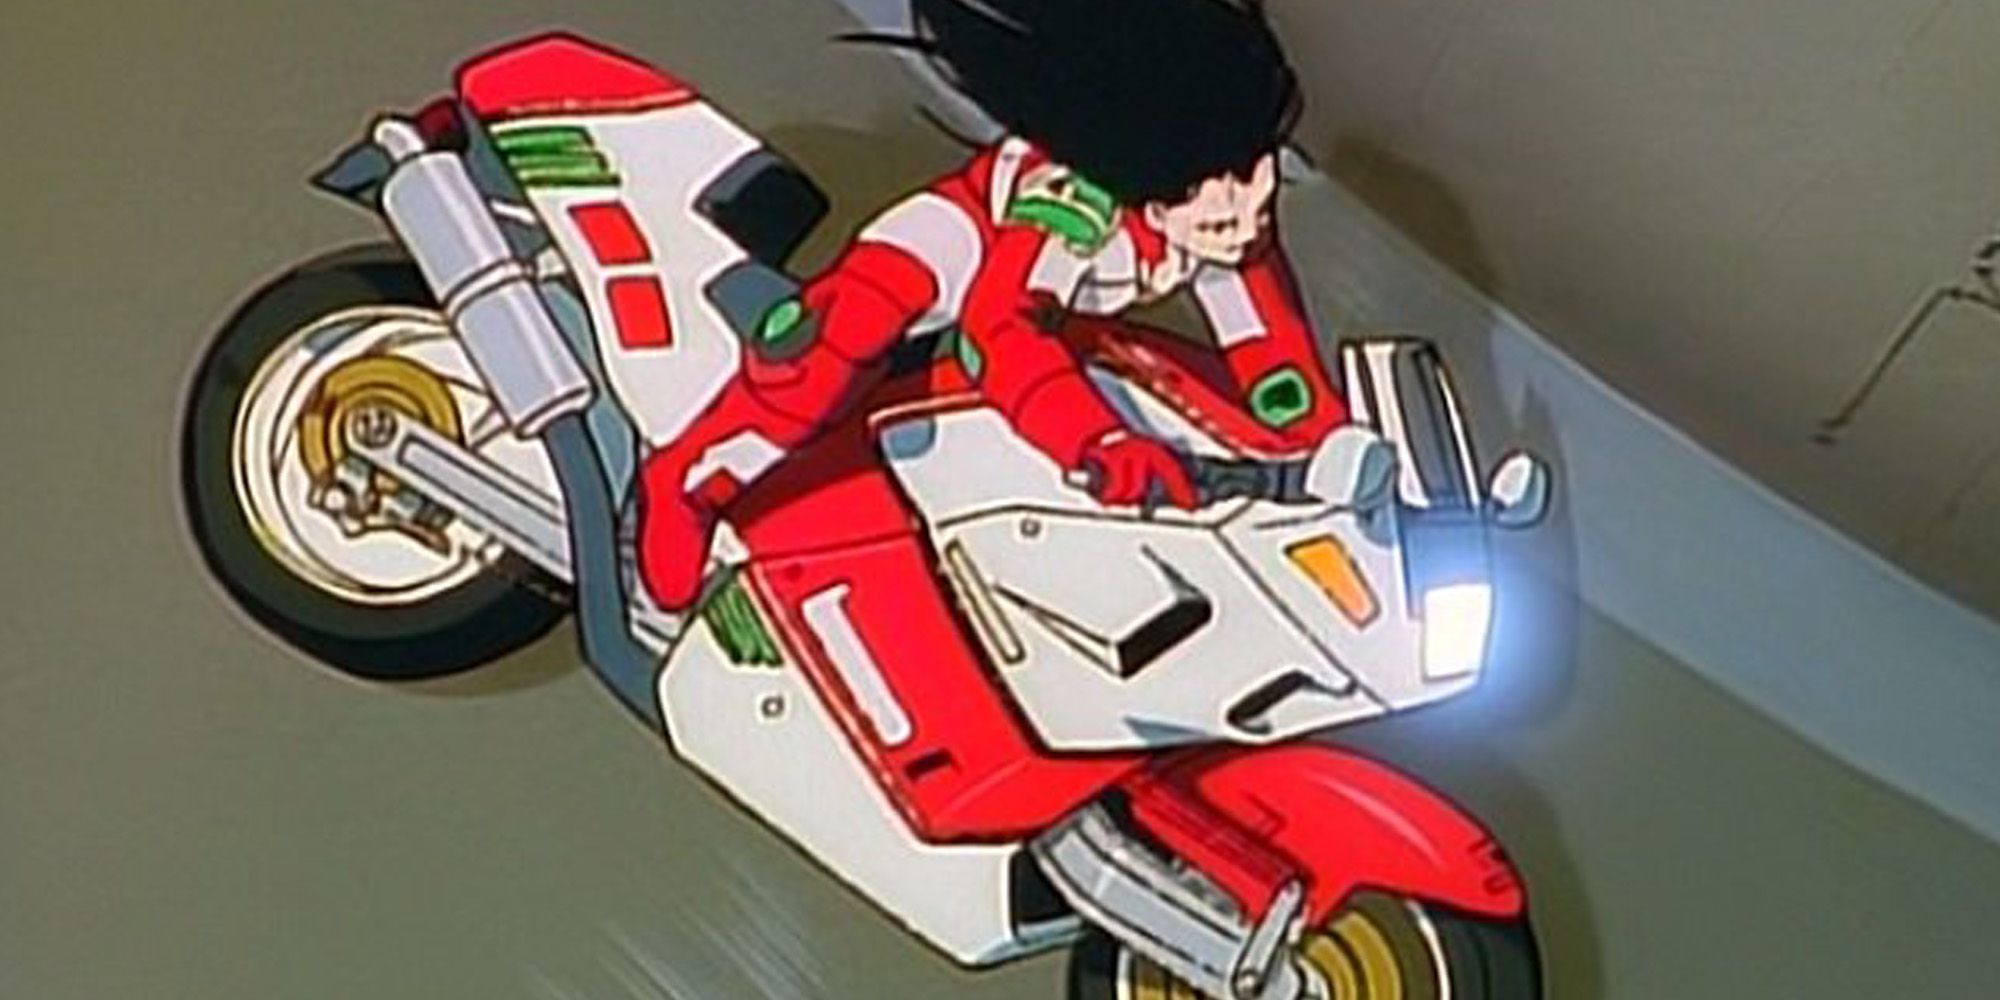 Anime Motorcycle - Etsy